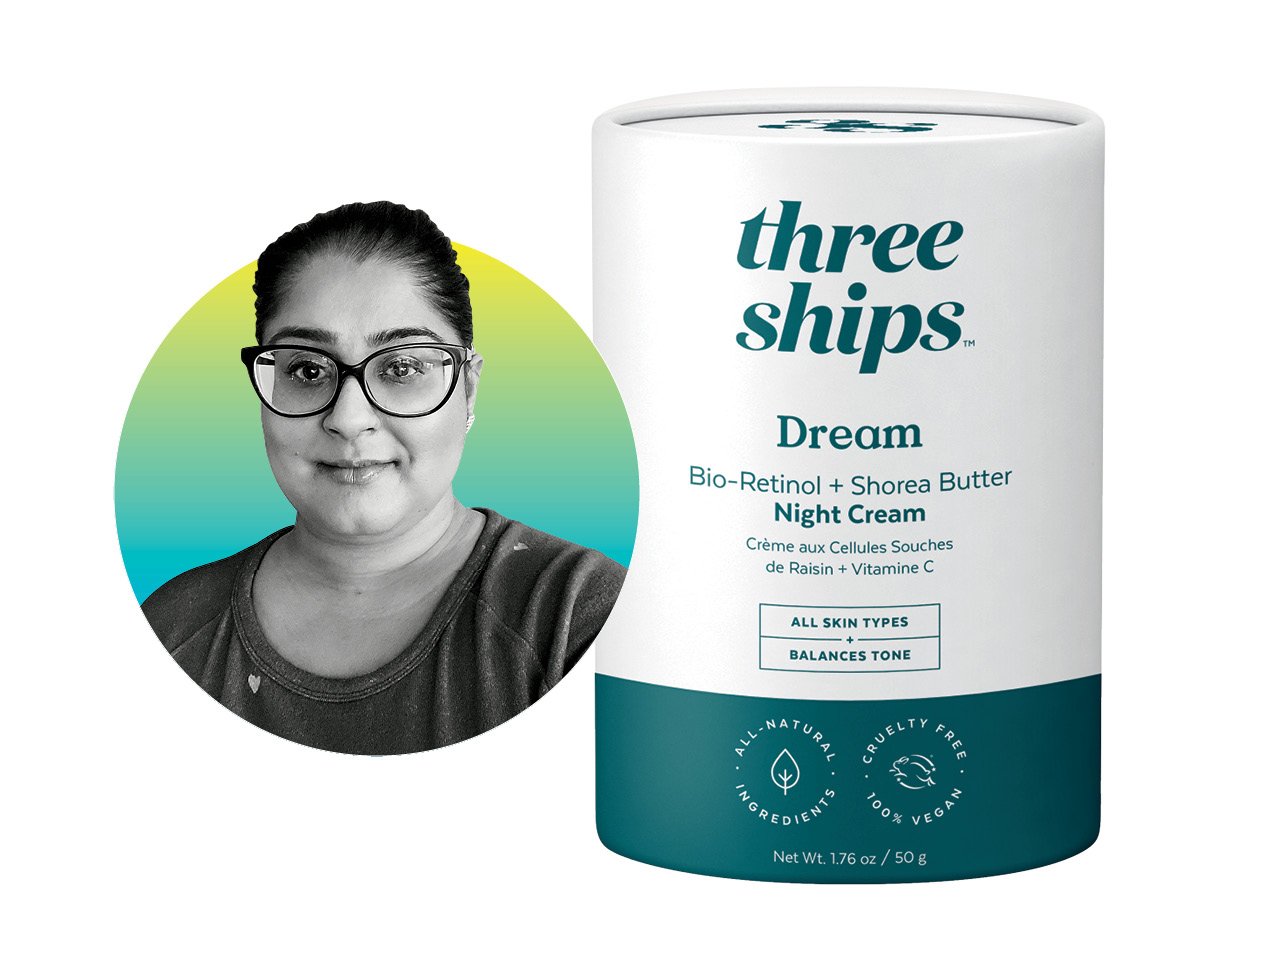 A Chatelaine reader reviews the Three Ships Fream Bio-Retinol and Shorea Butter Night Cream.